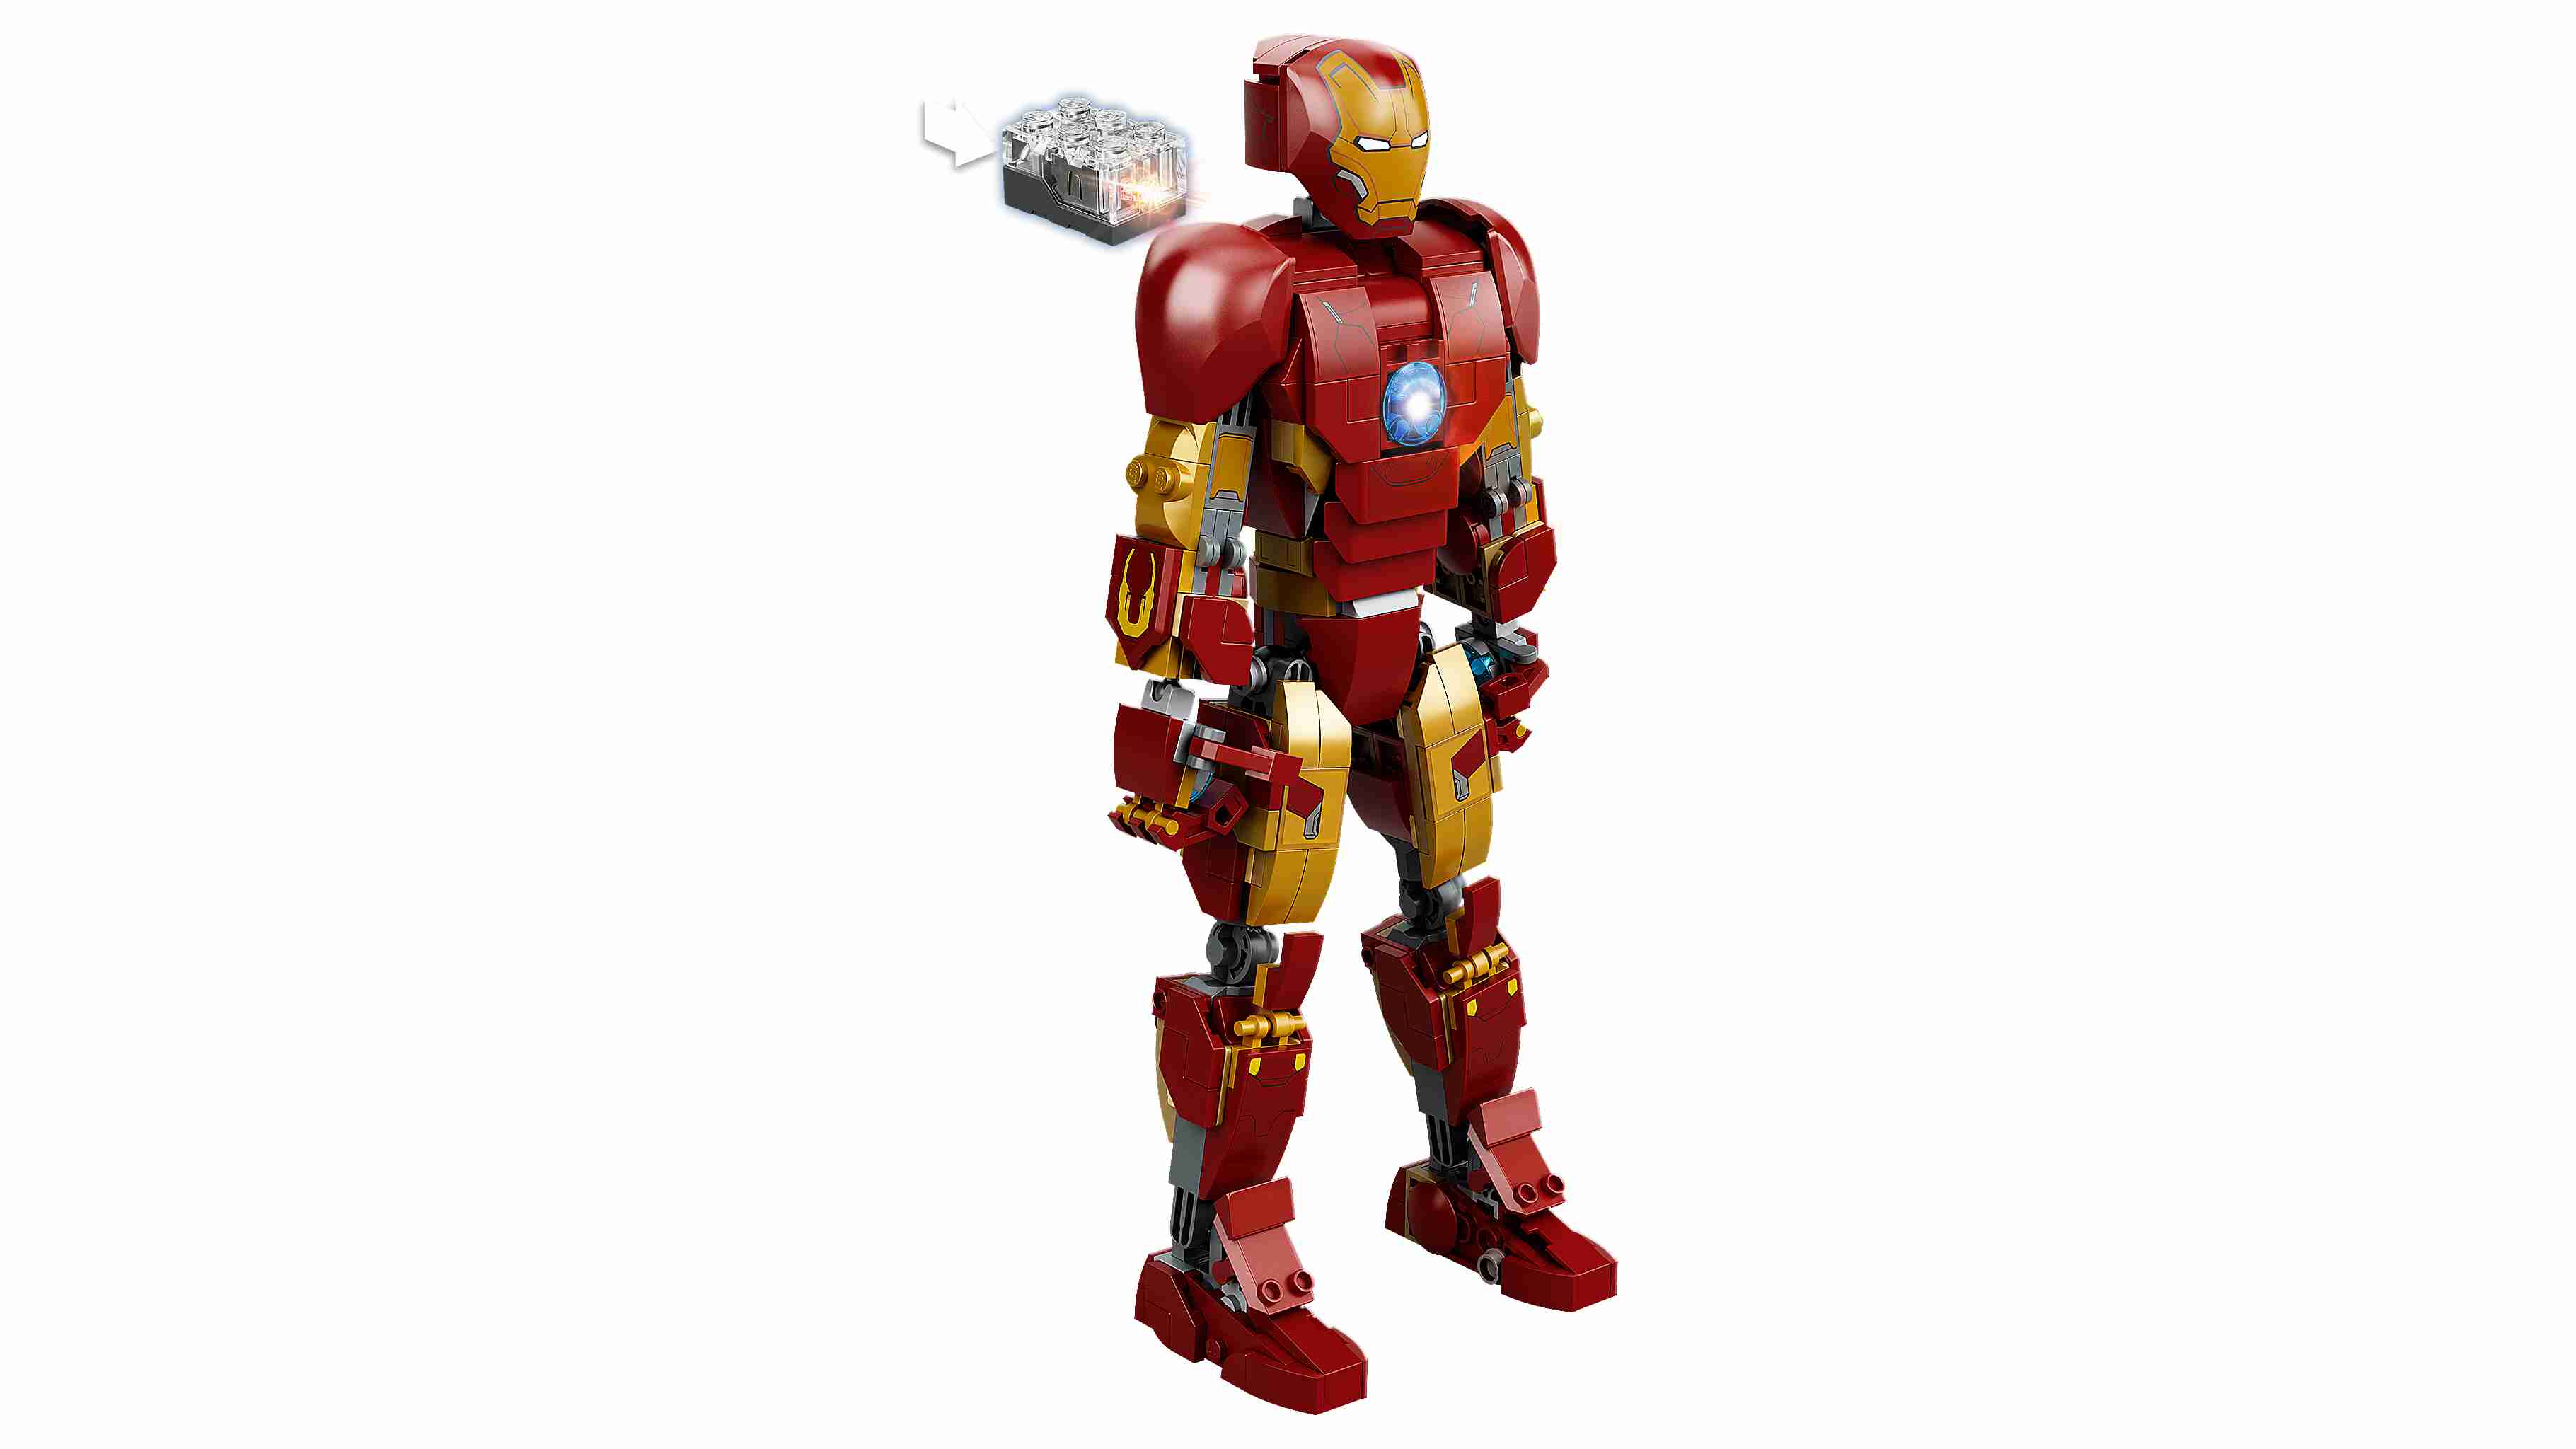 LEGO 76206 Marvel Iron Man Figur, aus Avengers: Age of Ultron, Infinity Saga